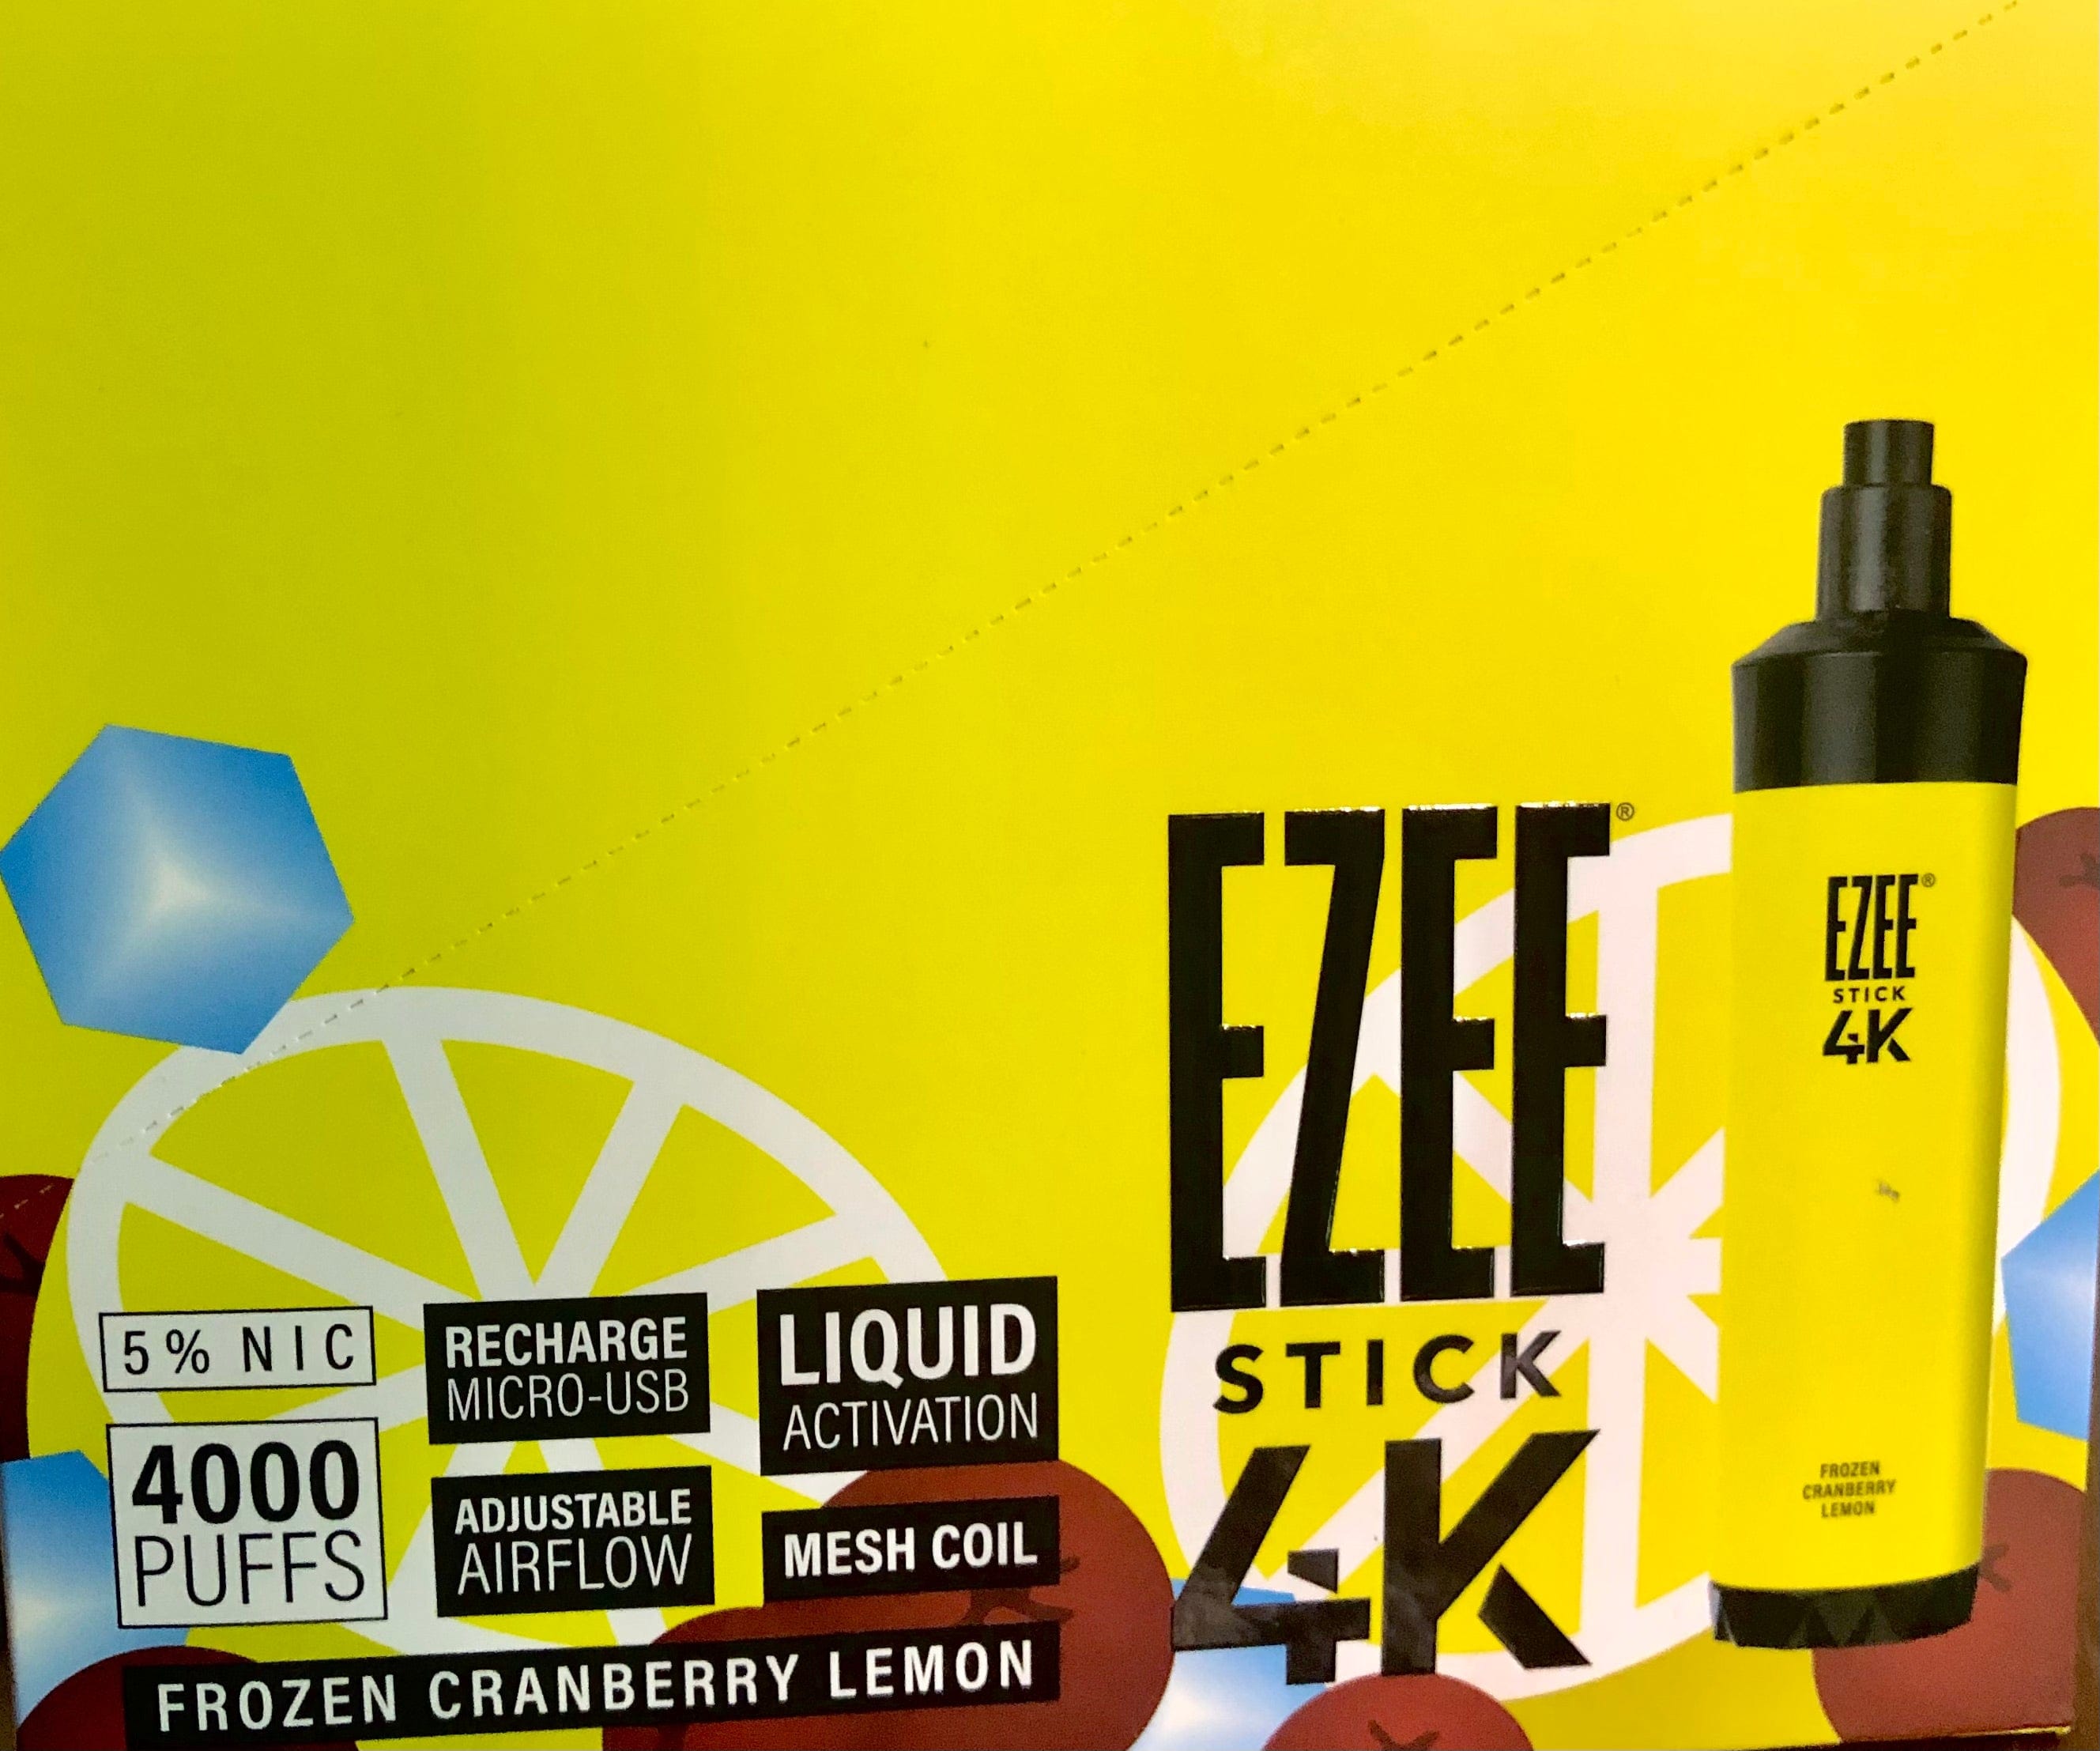 EZEE STICK 4K DISPOSABLE VAPE DEVICE 5% Nicotine 4000 Puffs DISPOSABLE